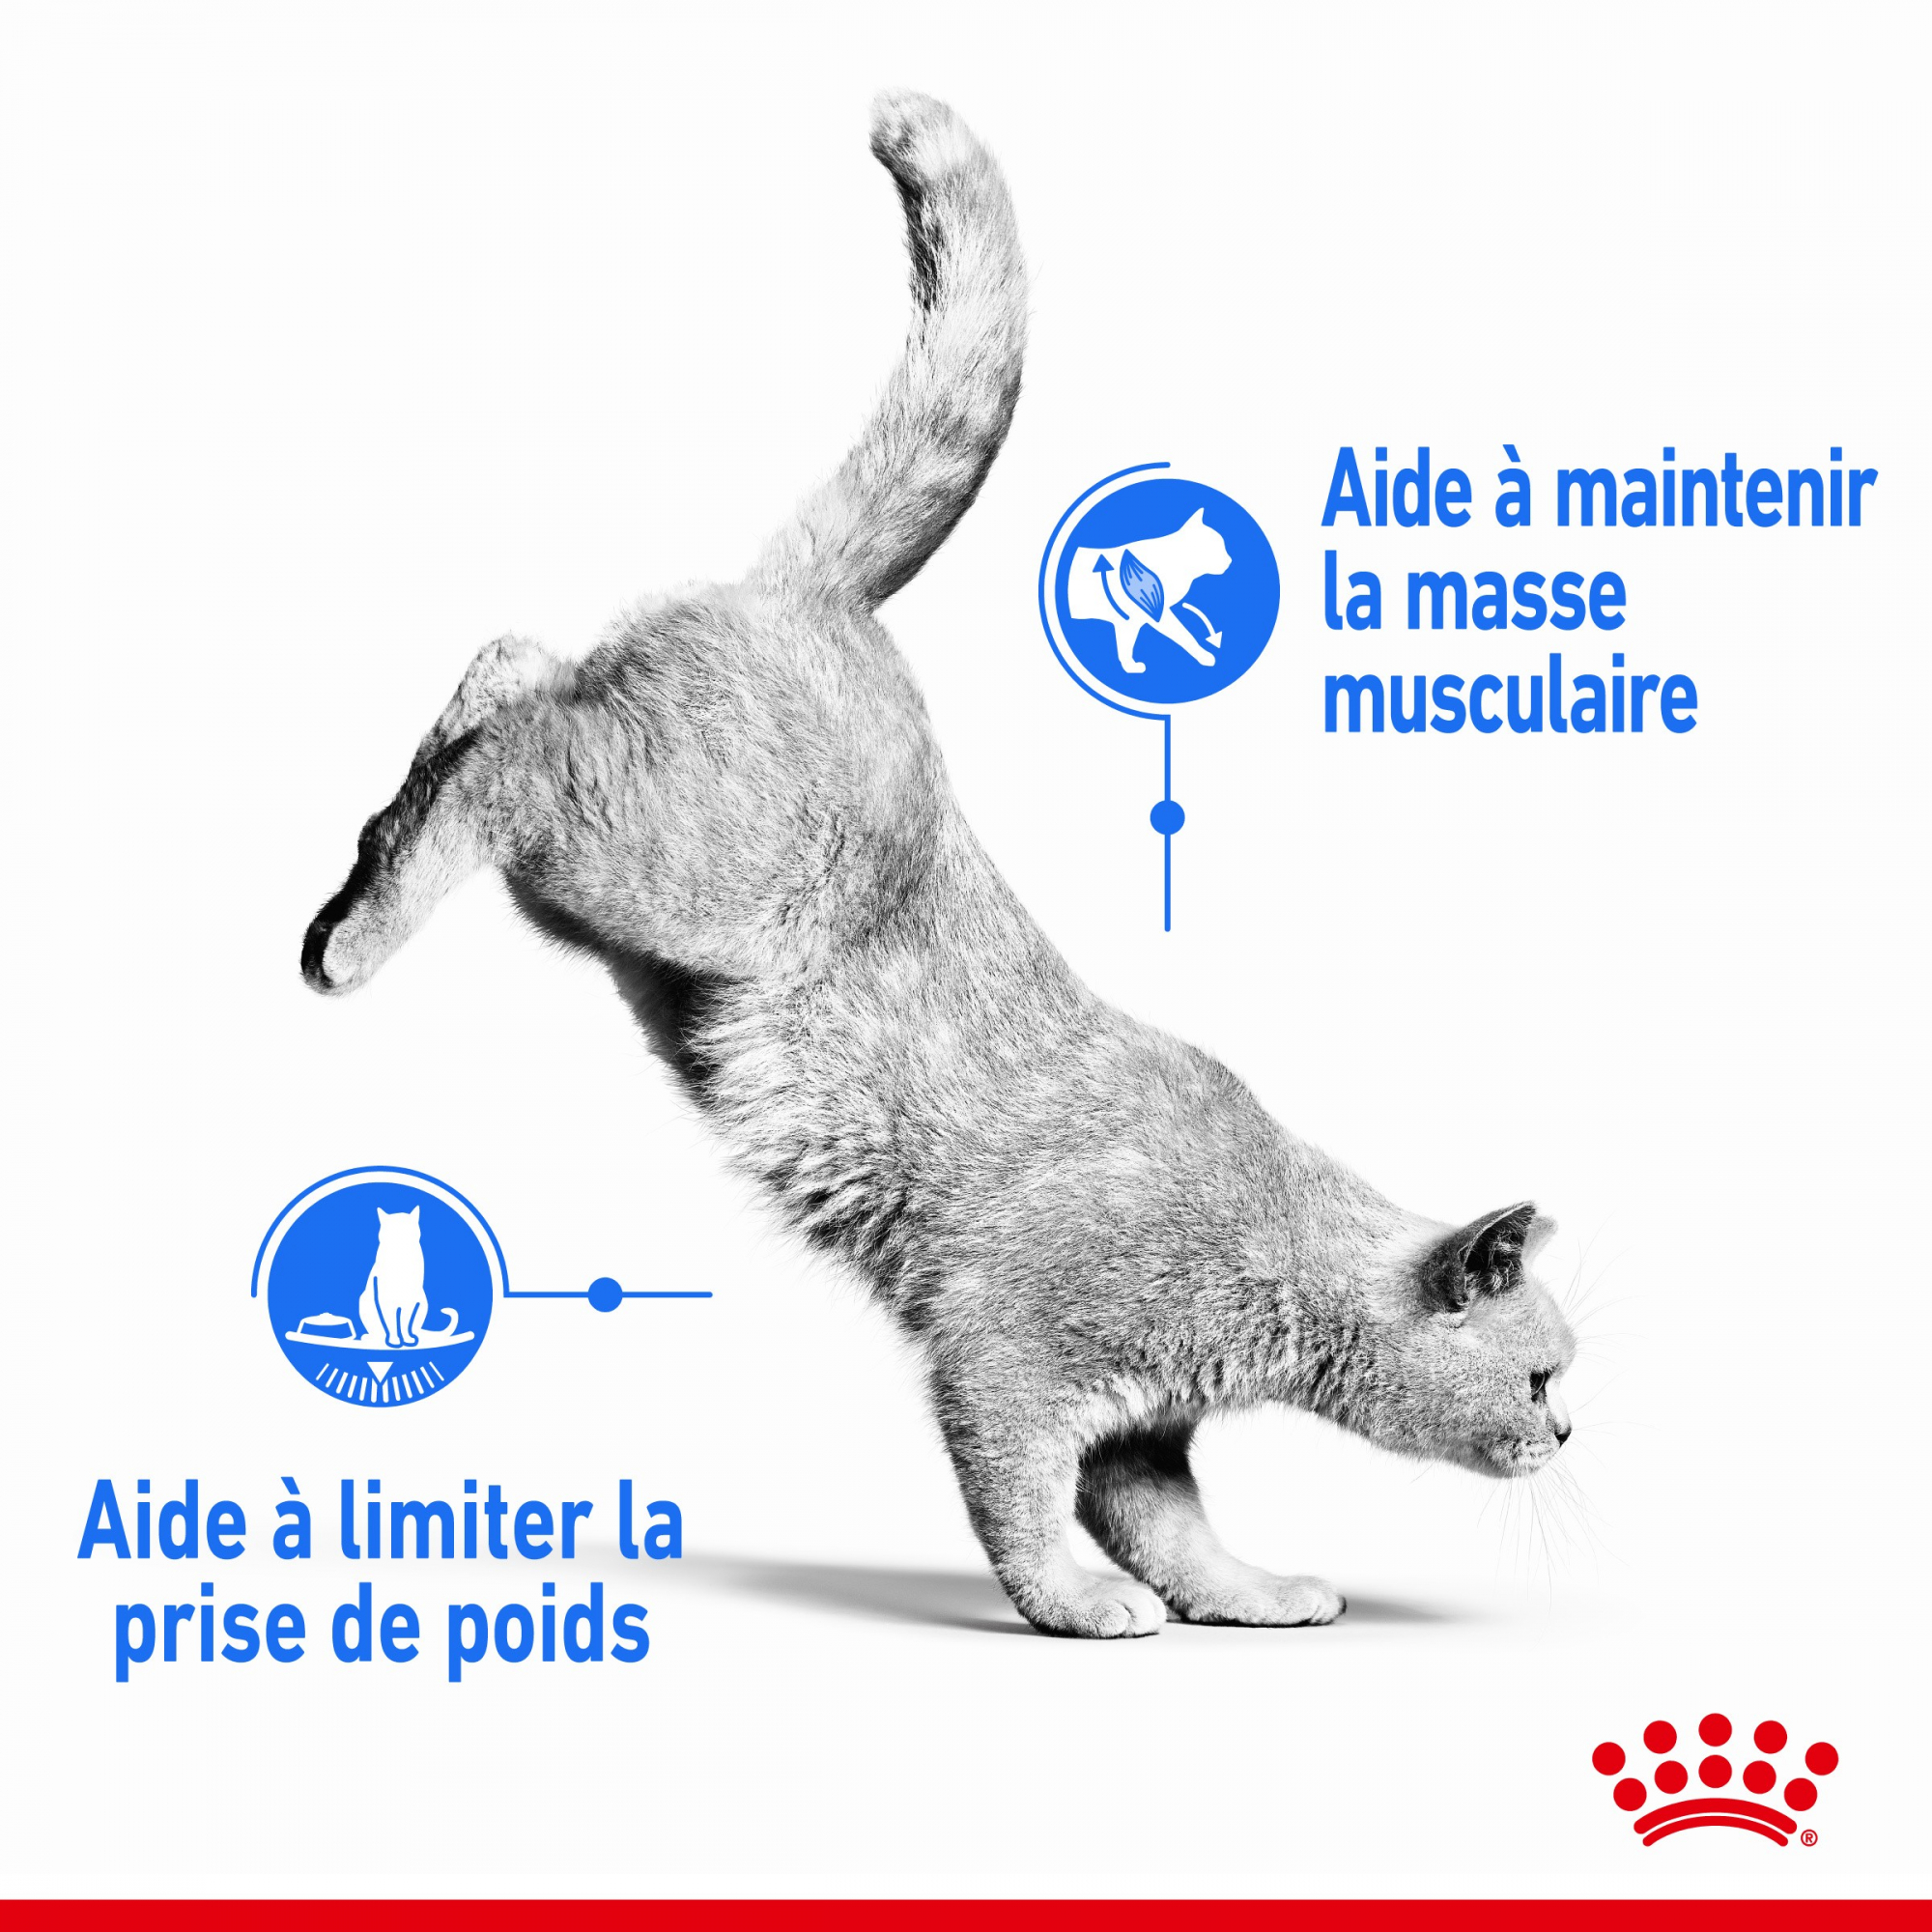 ROYAL CANIN Light Weight Care in Mousse für Katzen